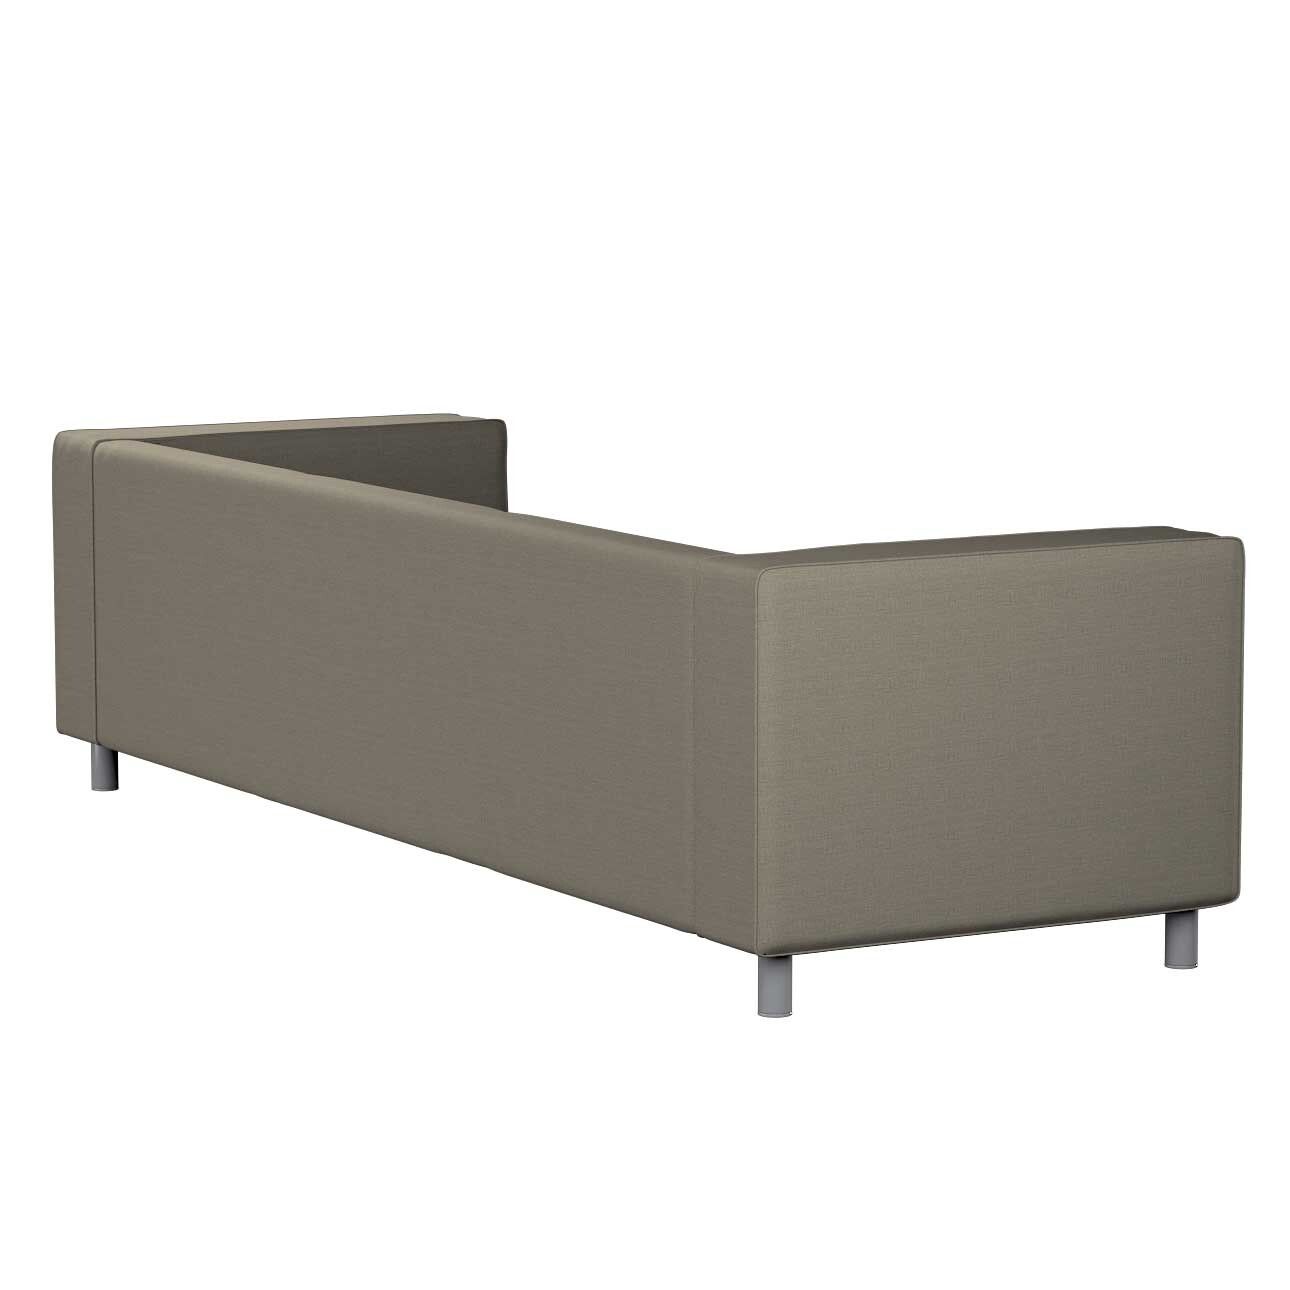 Bezug für Klippan 4-Sitzer Sofa, beige-grau, Bezug für Klippan 4-Sitzer, Li günstig online kaufen